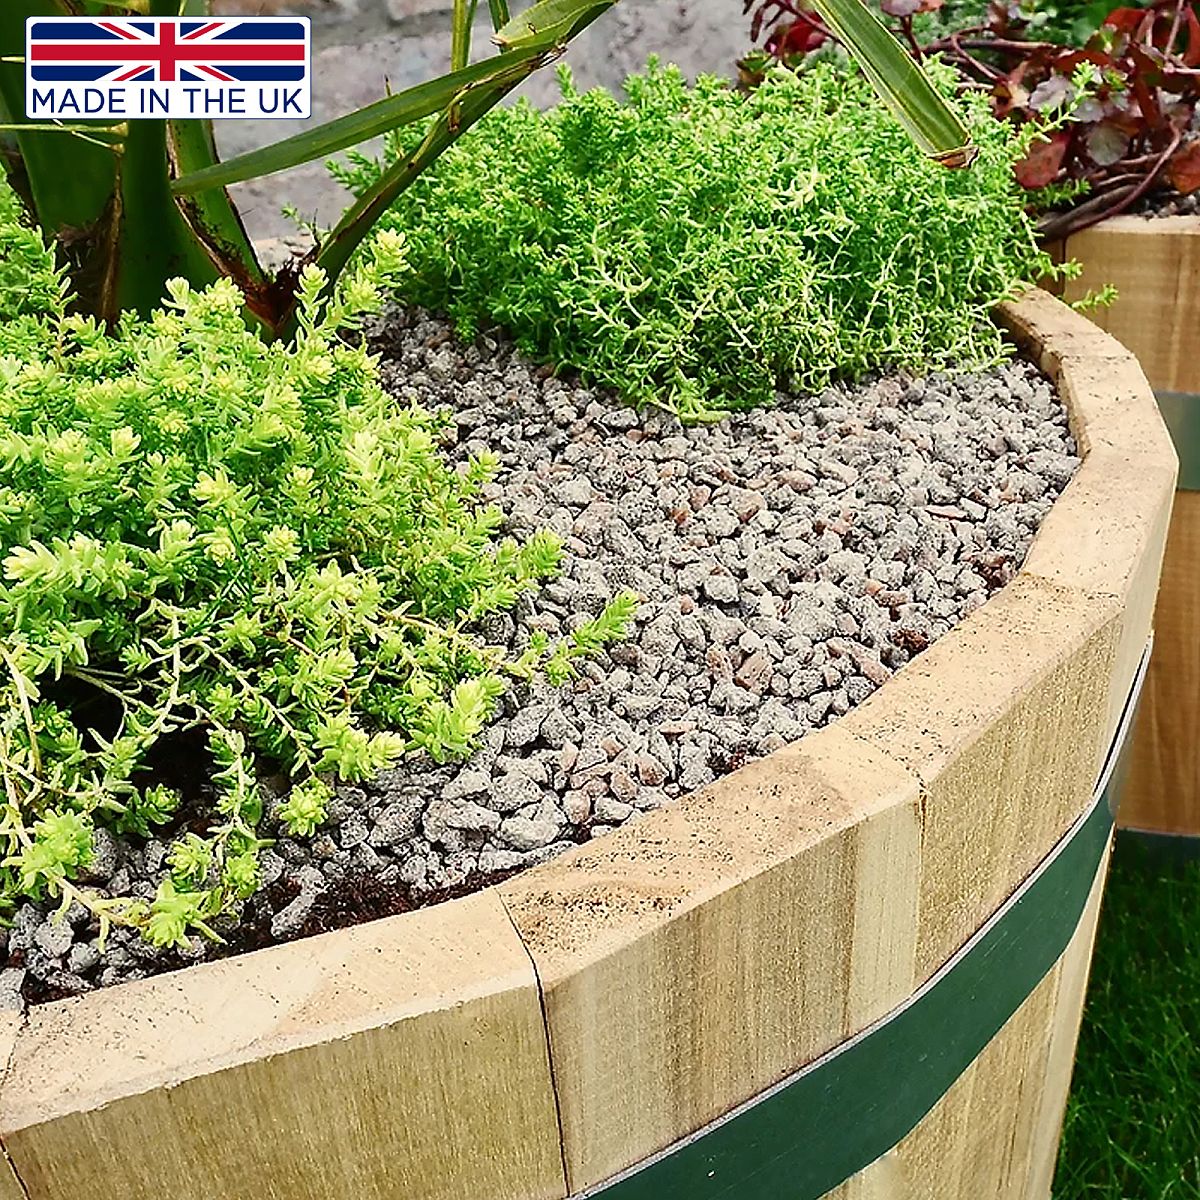 Rustic European Birch Hardwood Round Tub Half Barrel Outdoor Planter Made in UK by HORTICO